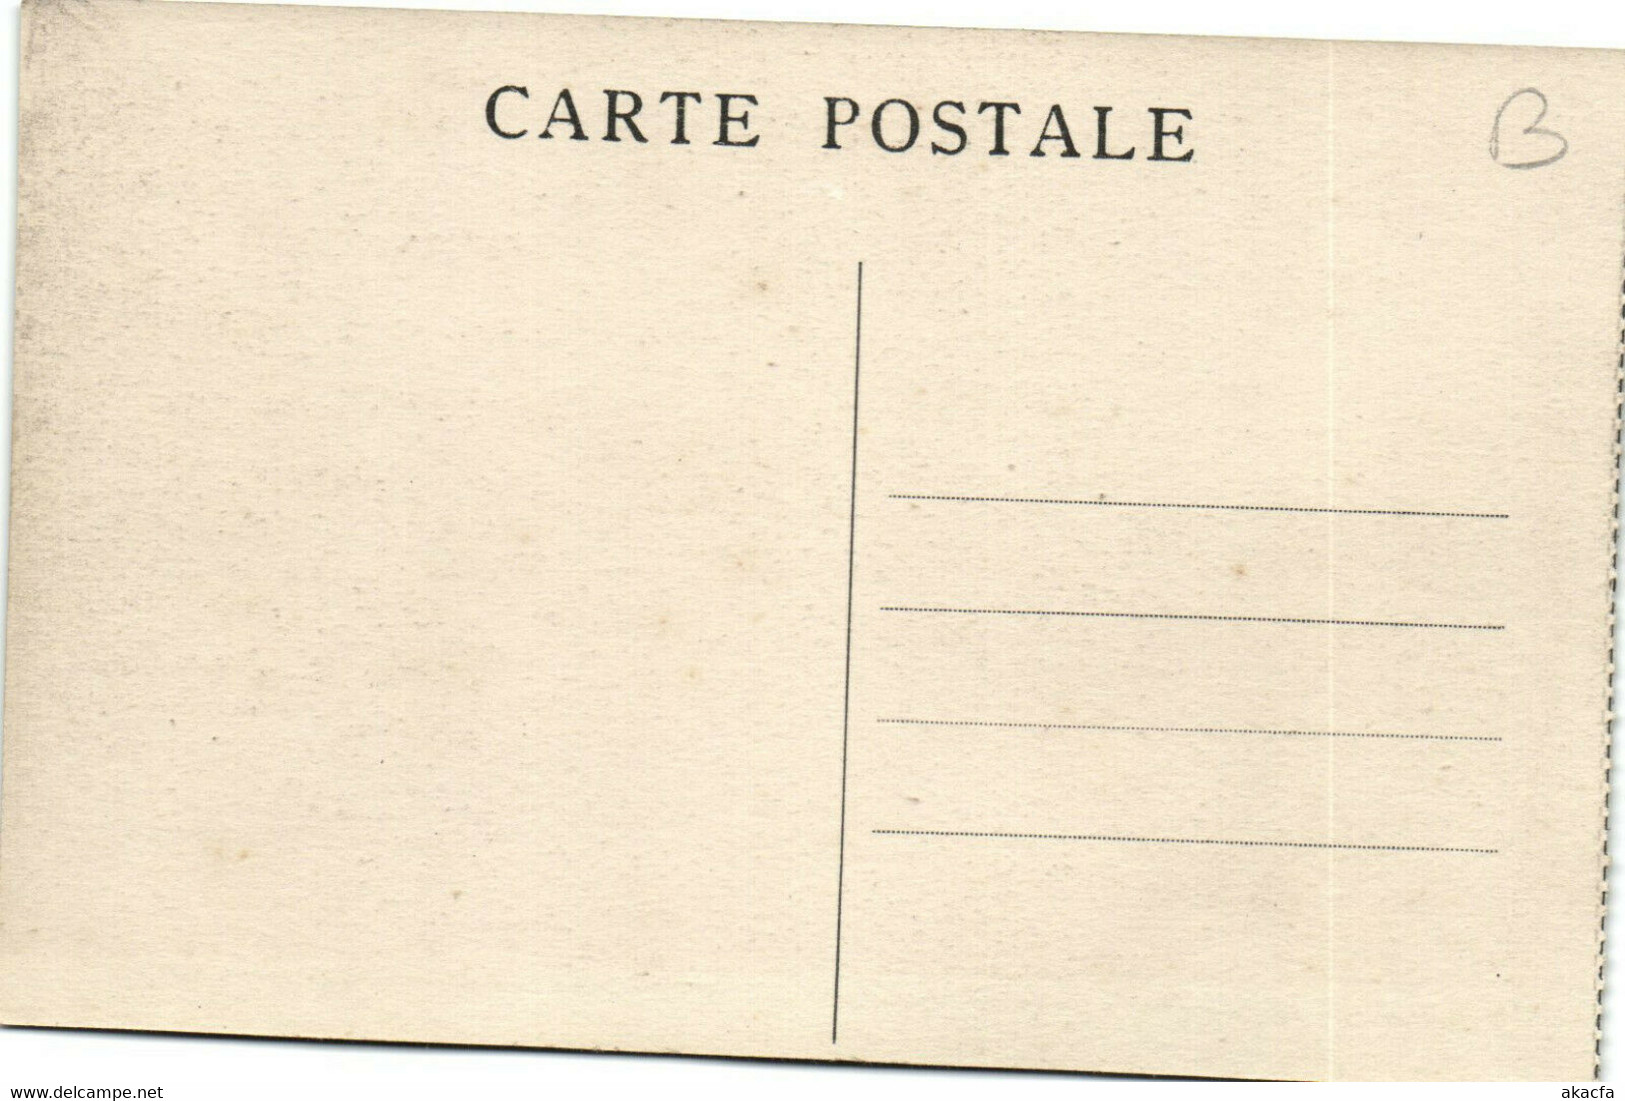 PC UK, SALOMON ISLANDS, MALÉAI, LE PLUS BEAU, Vintage Postcard (b33522) - Solomoneilanden